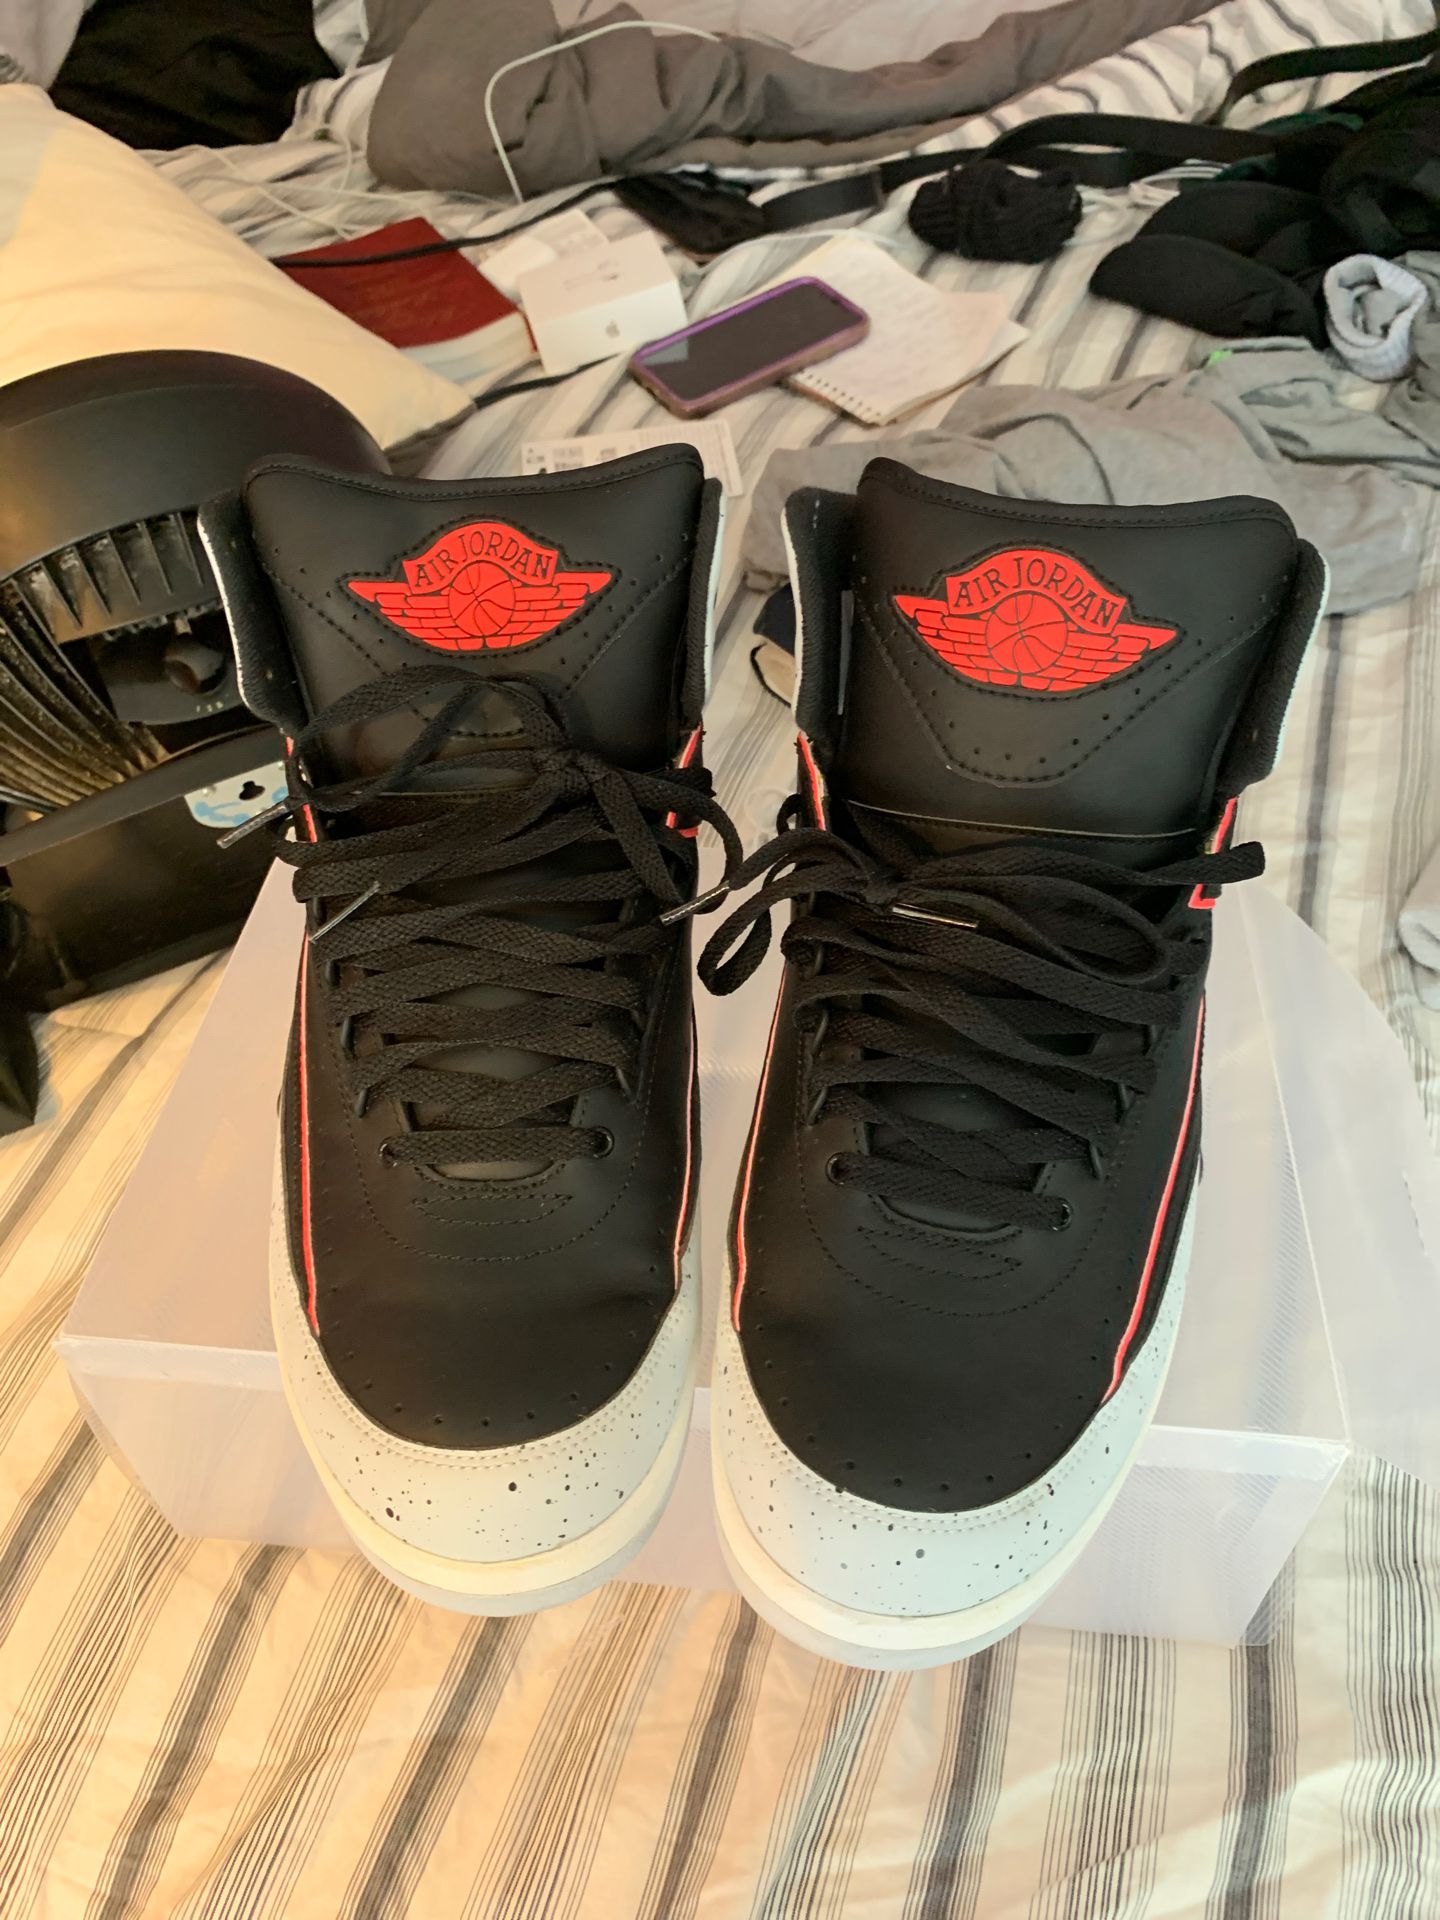 Air Jordan’s 2 size 13